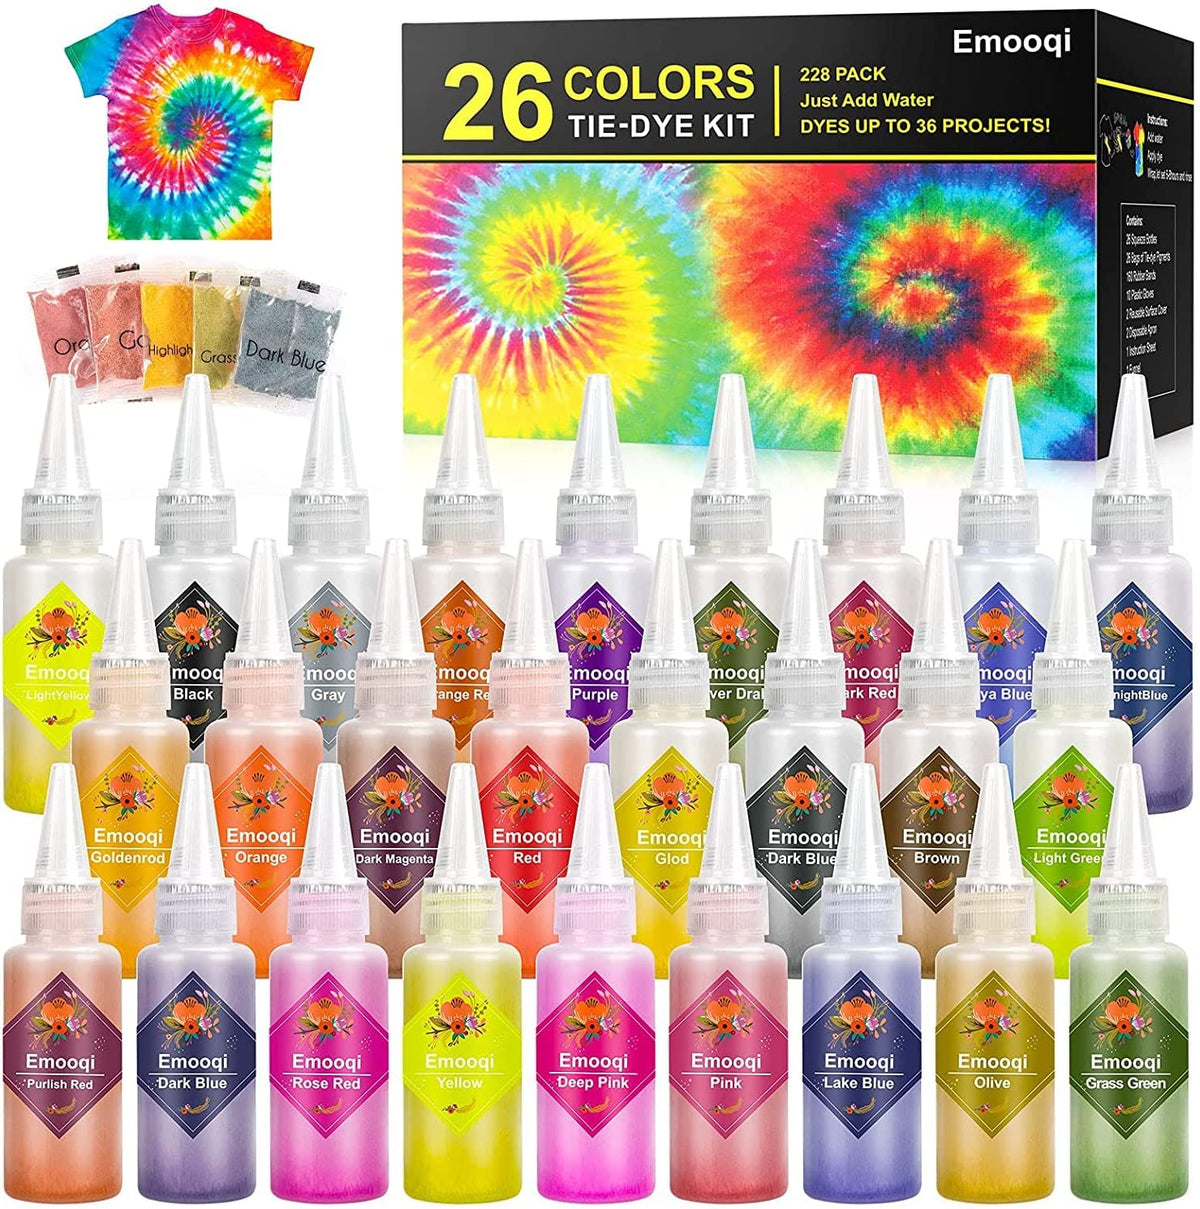 Rainbow Tie Dye Party Supplies Craft Kit: Rainbow Classic (36-Pack